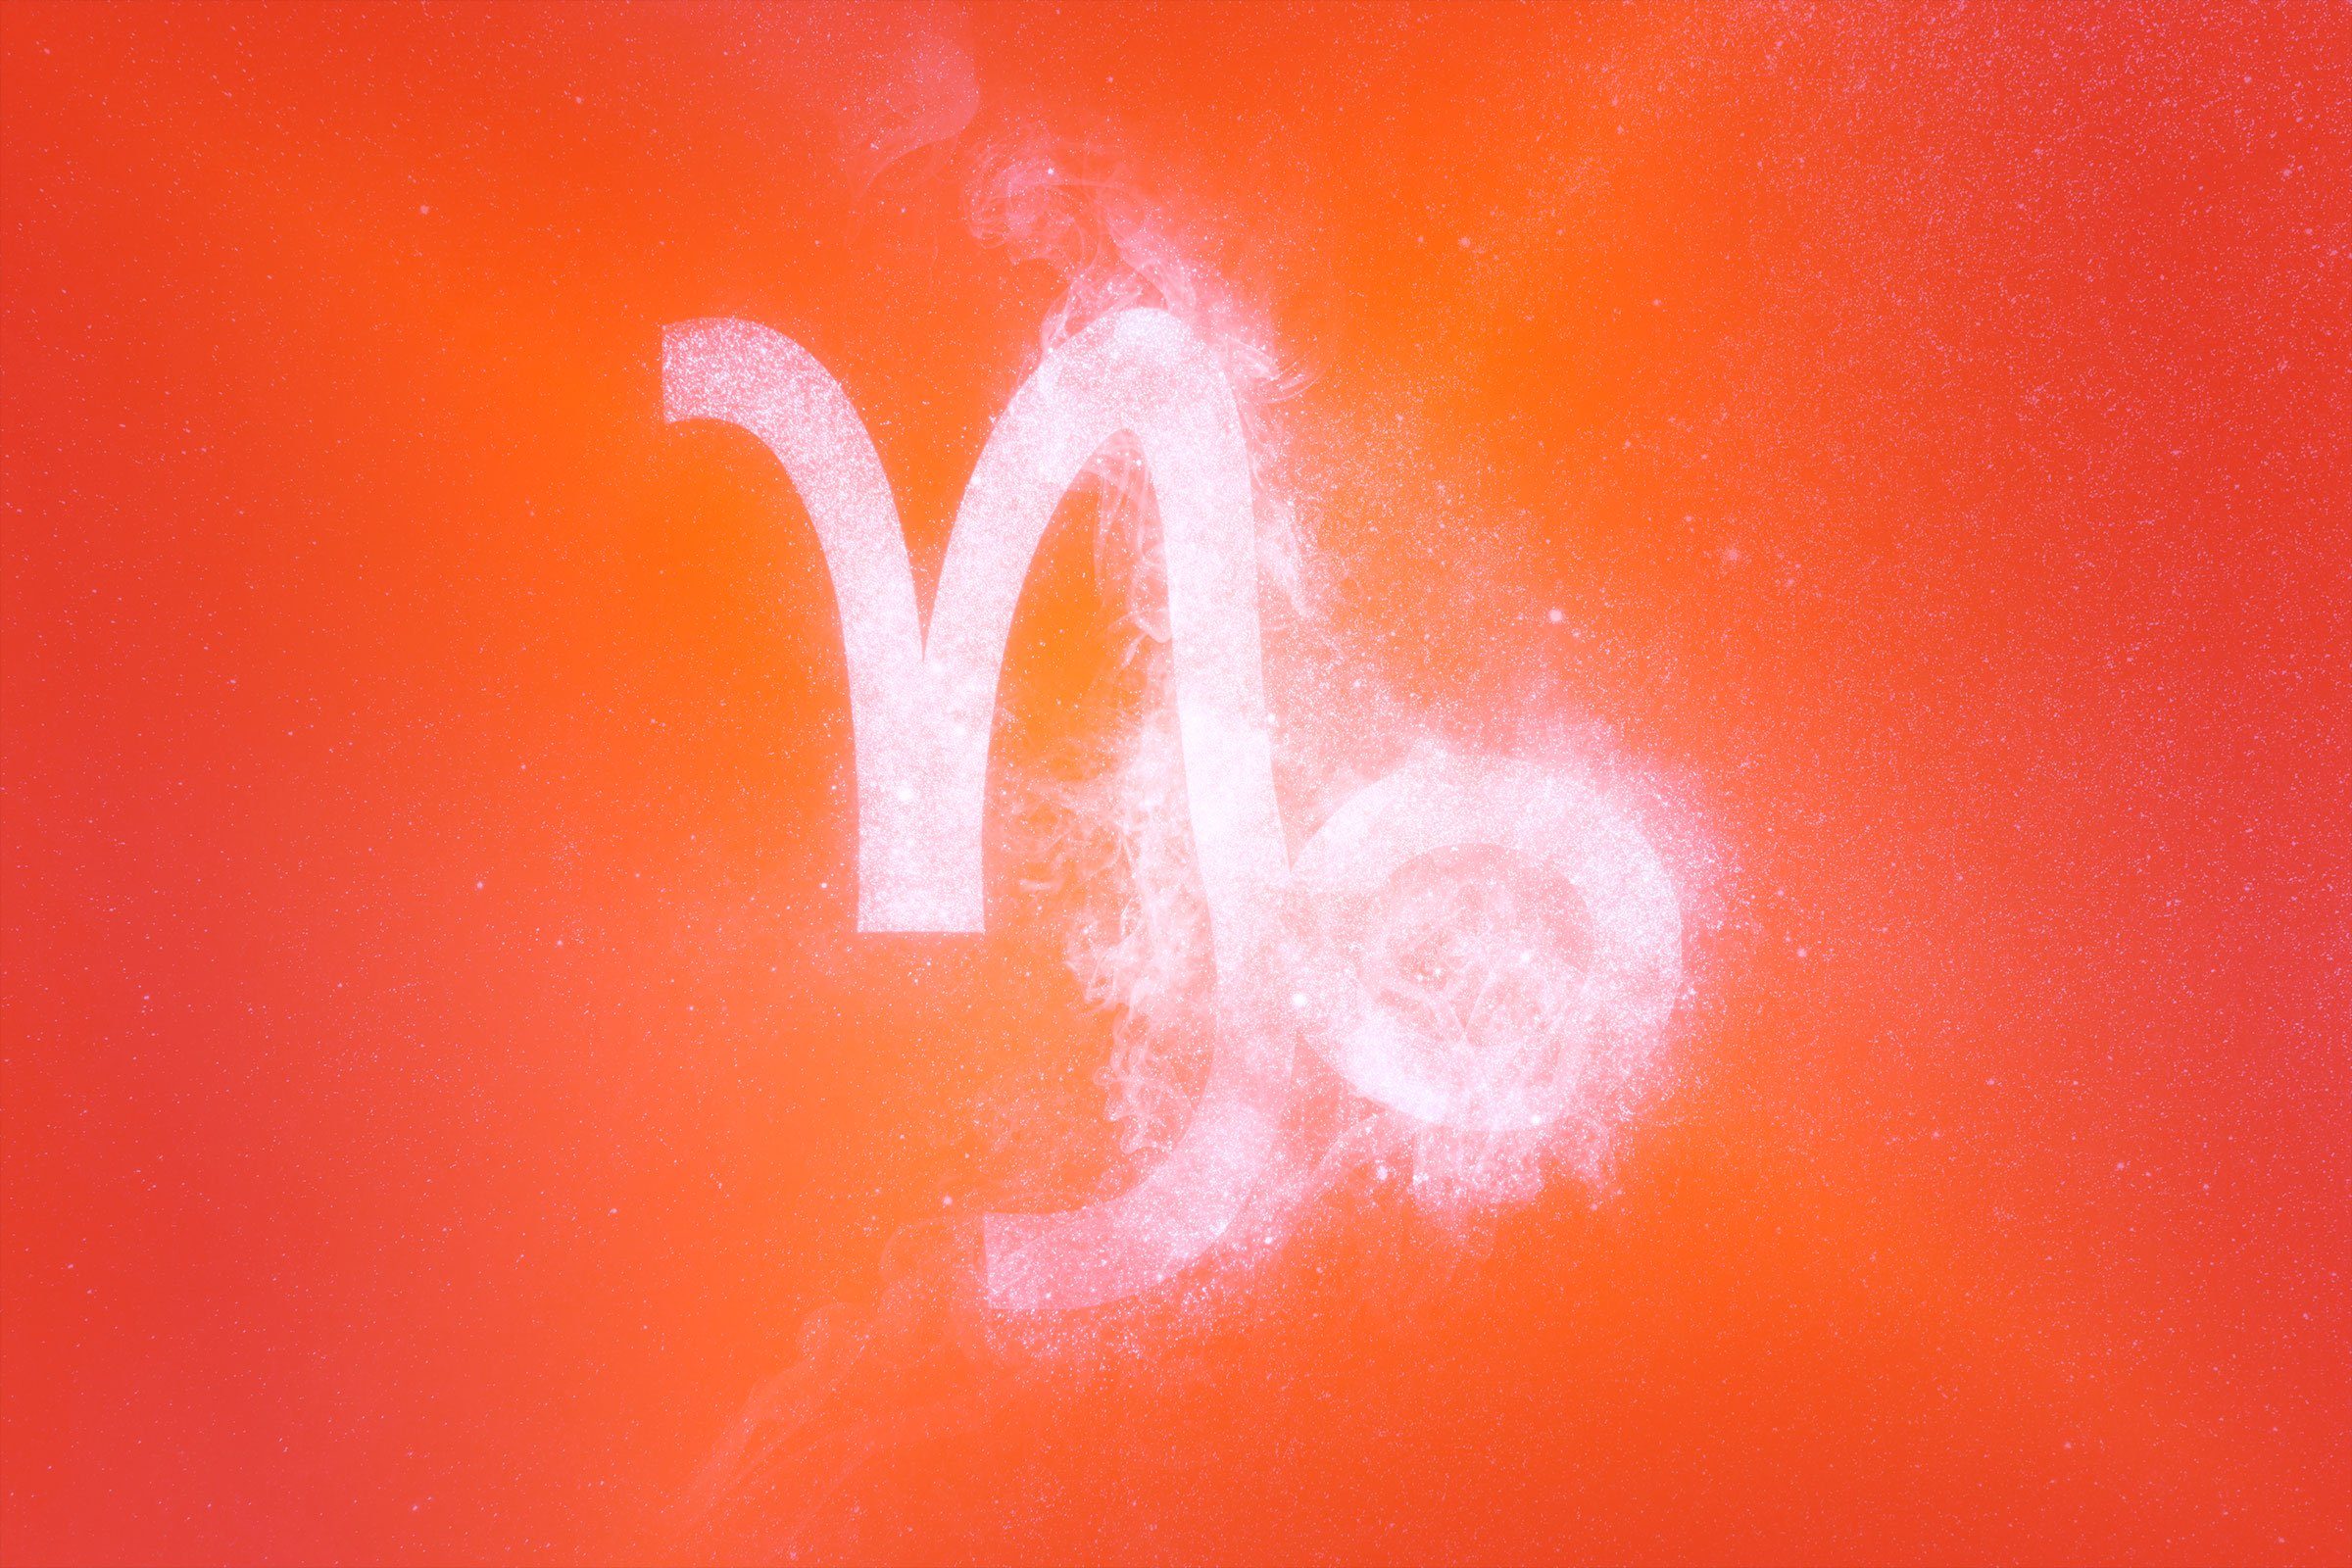 capricorn symbol with red-orange gradient overlay